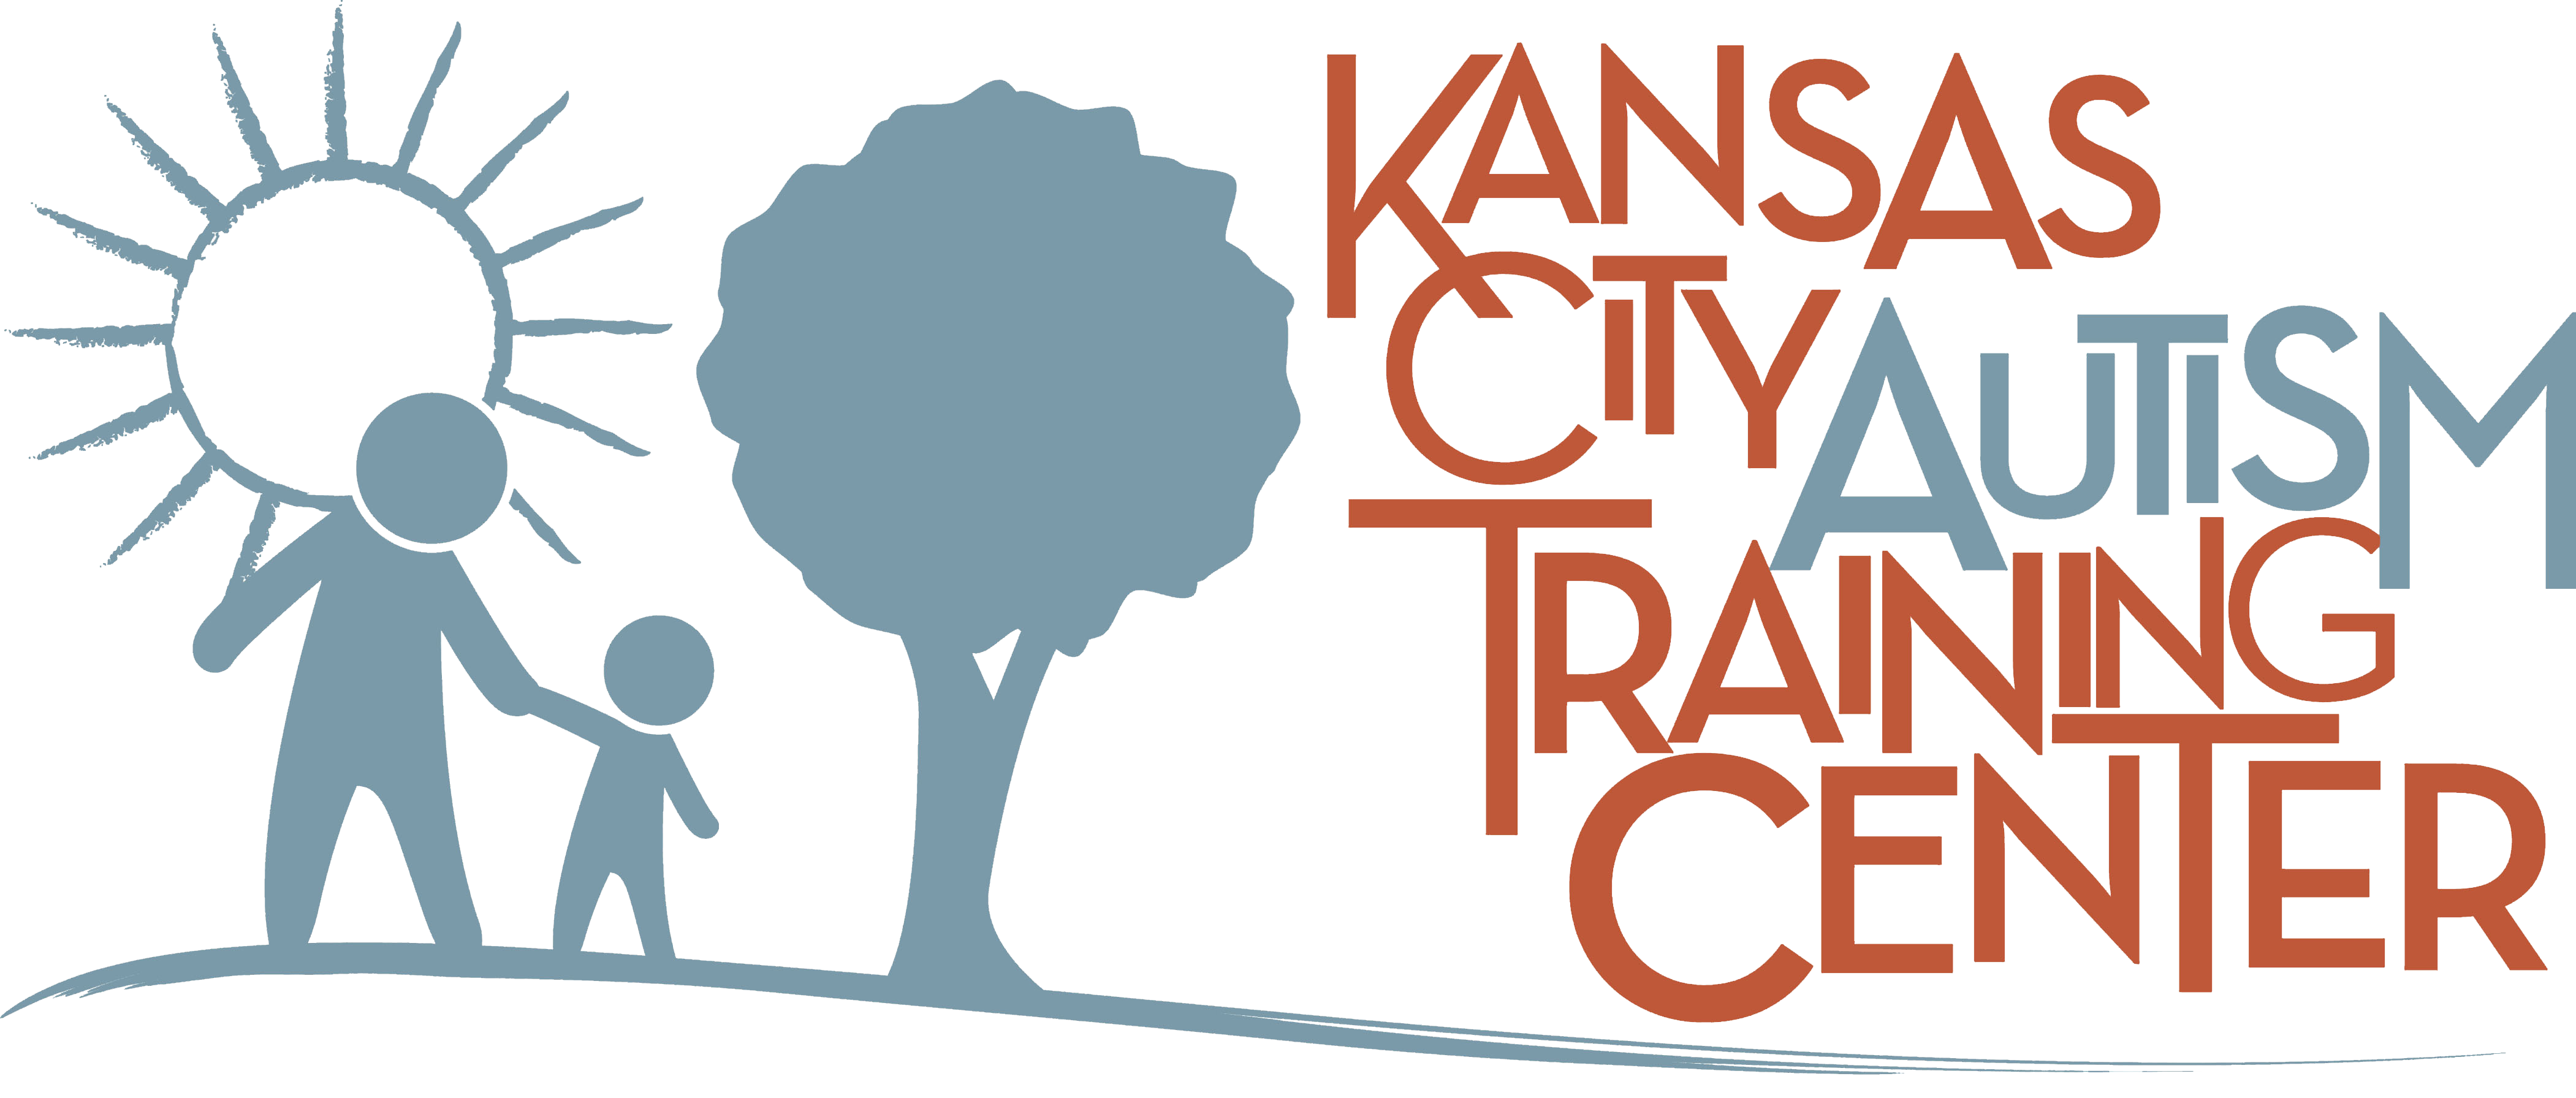 Kansas City Autism Training Center